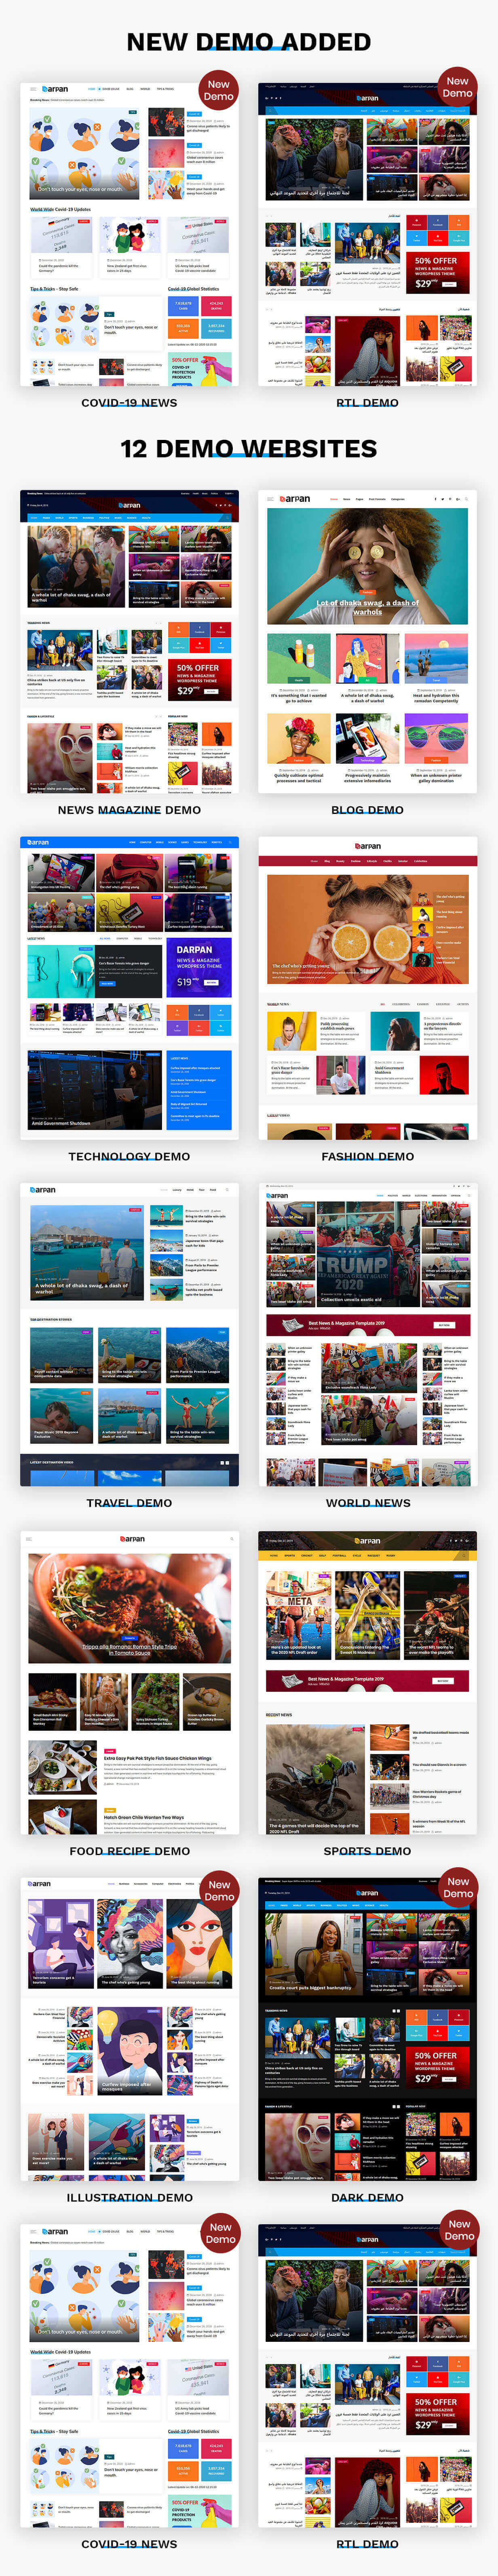 Darpan - News Magazine WordPress Theme - 5